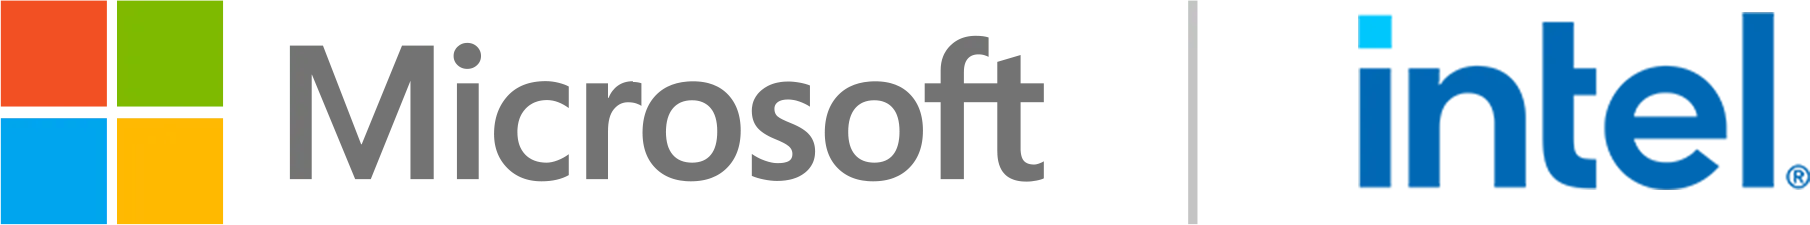 logo_microsoft_intel